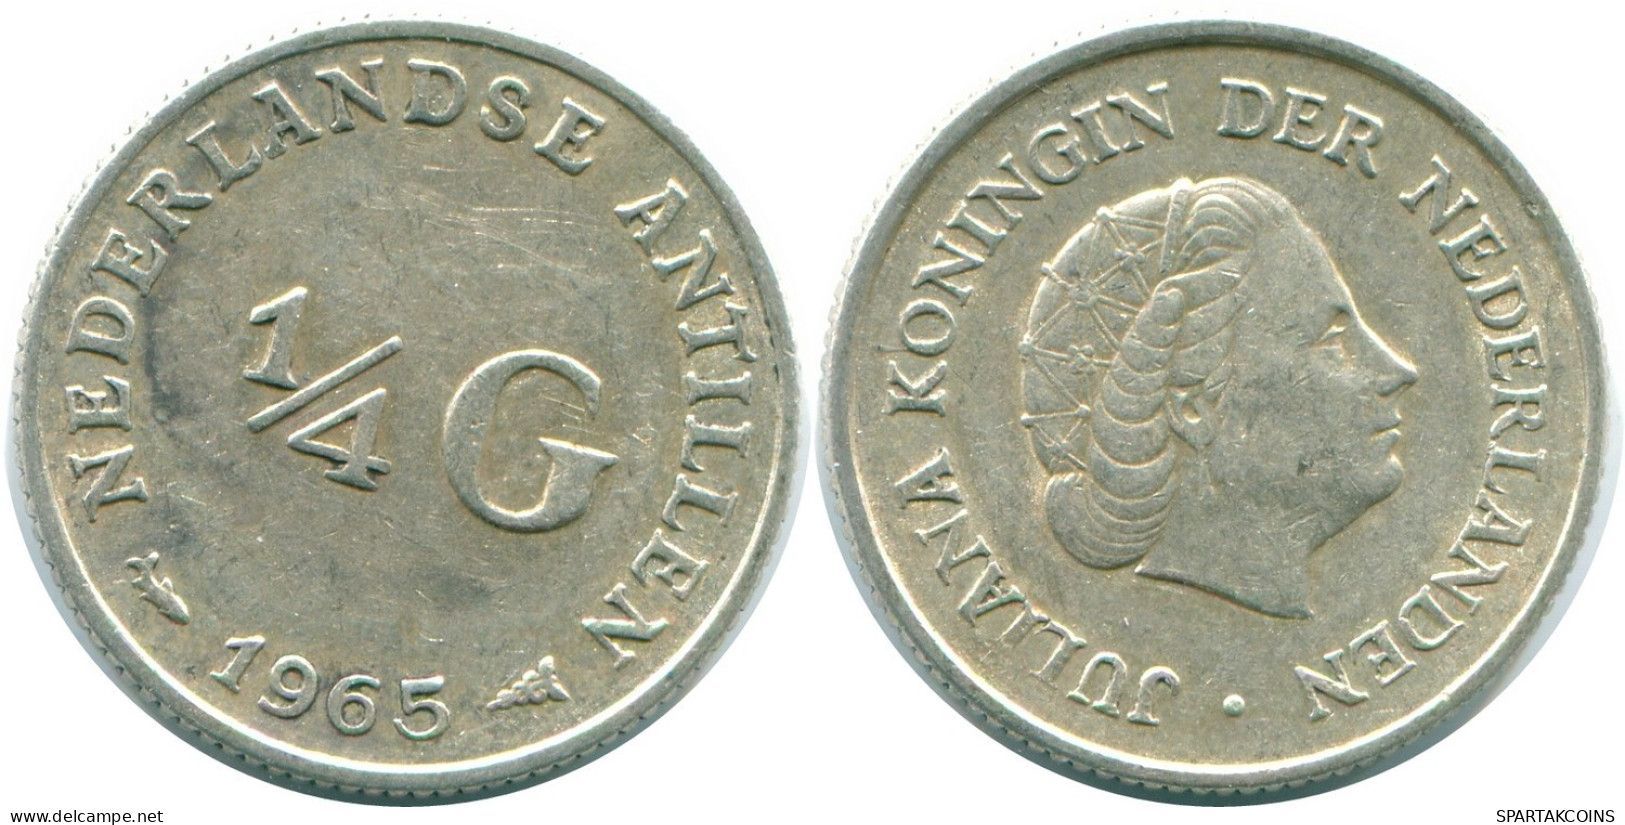 1/4 GULDEN 1965 NETHERLANDS ANTILLES SILVER Colonial Coin #NL11284.4.U.A - Netherlands Antilles